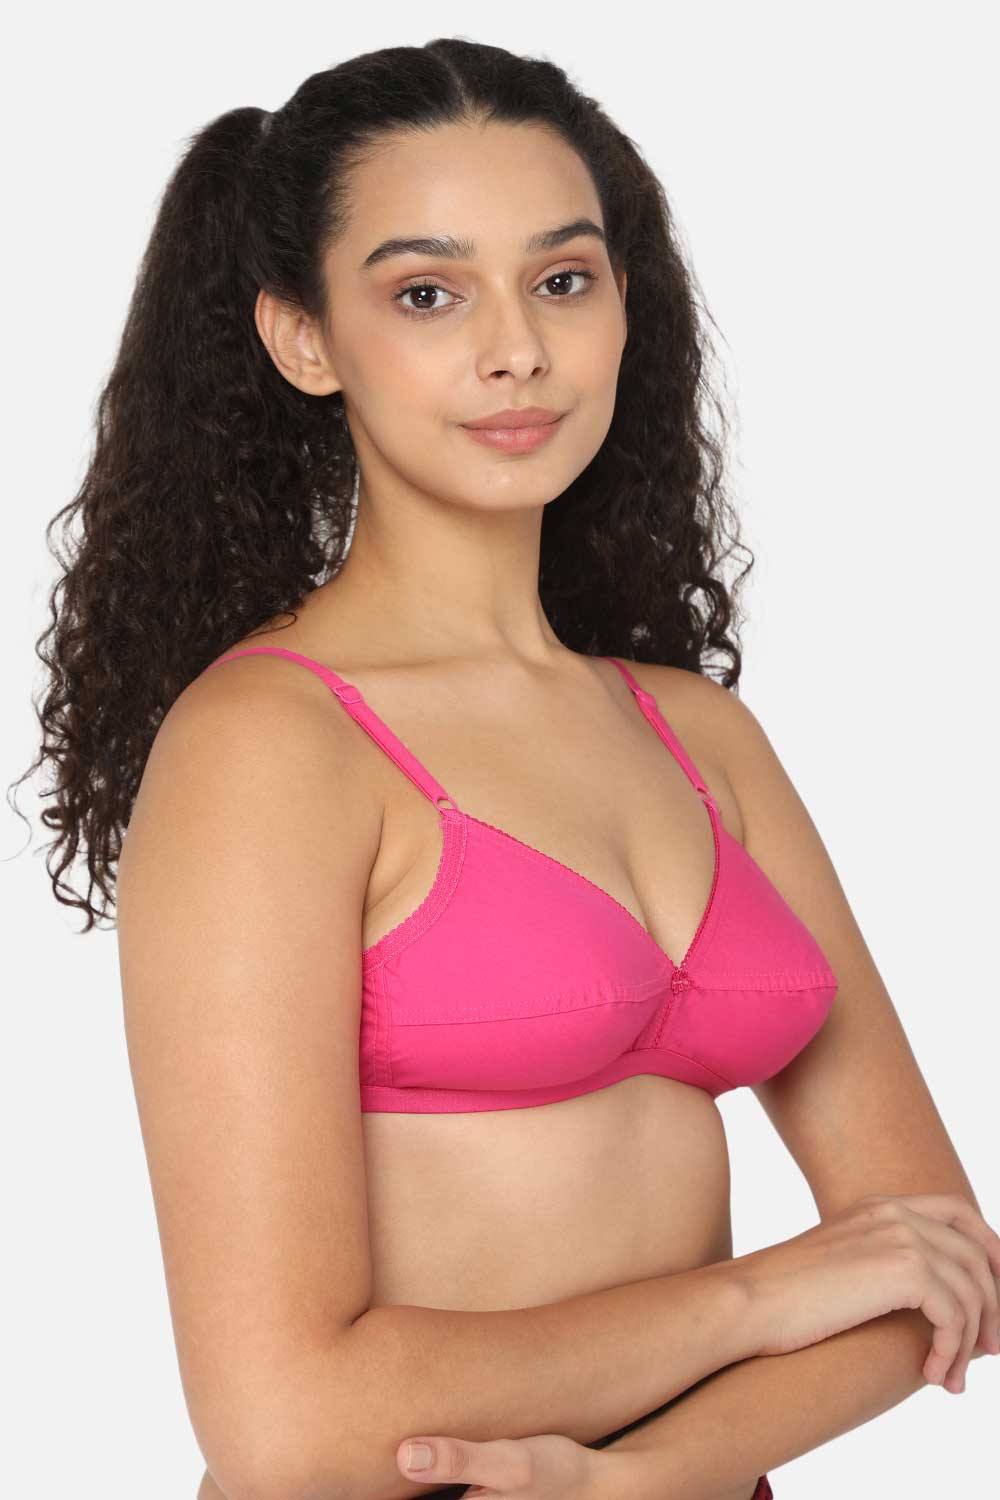 Naiduhall Saree Bra - Trend Size   30B Color BLUEATOLL